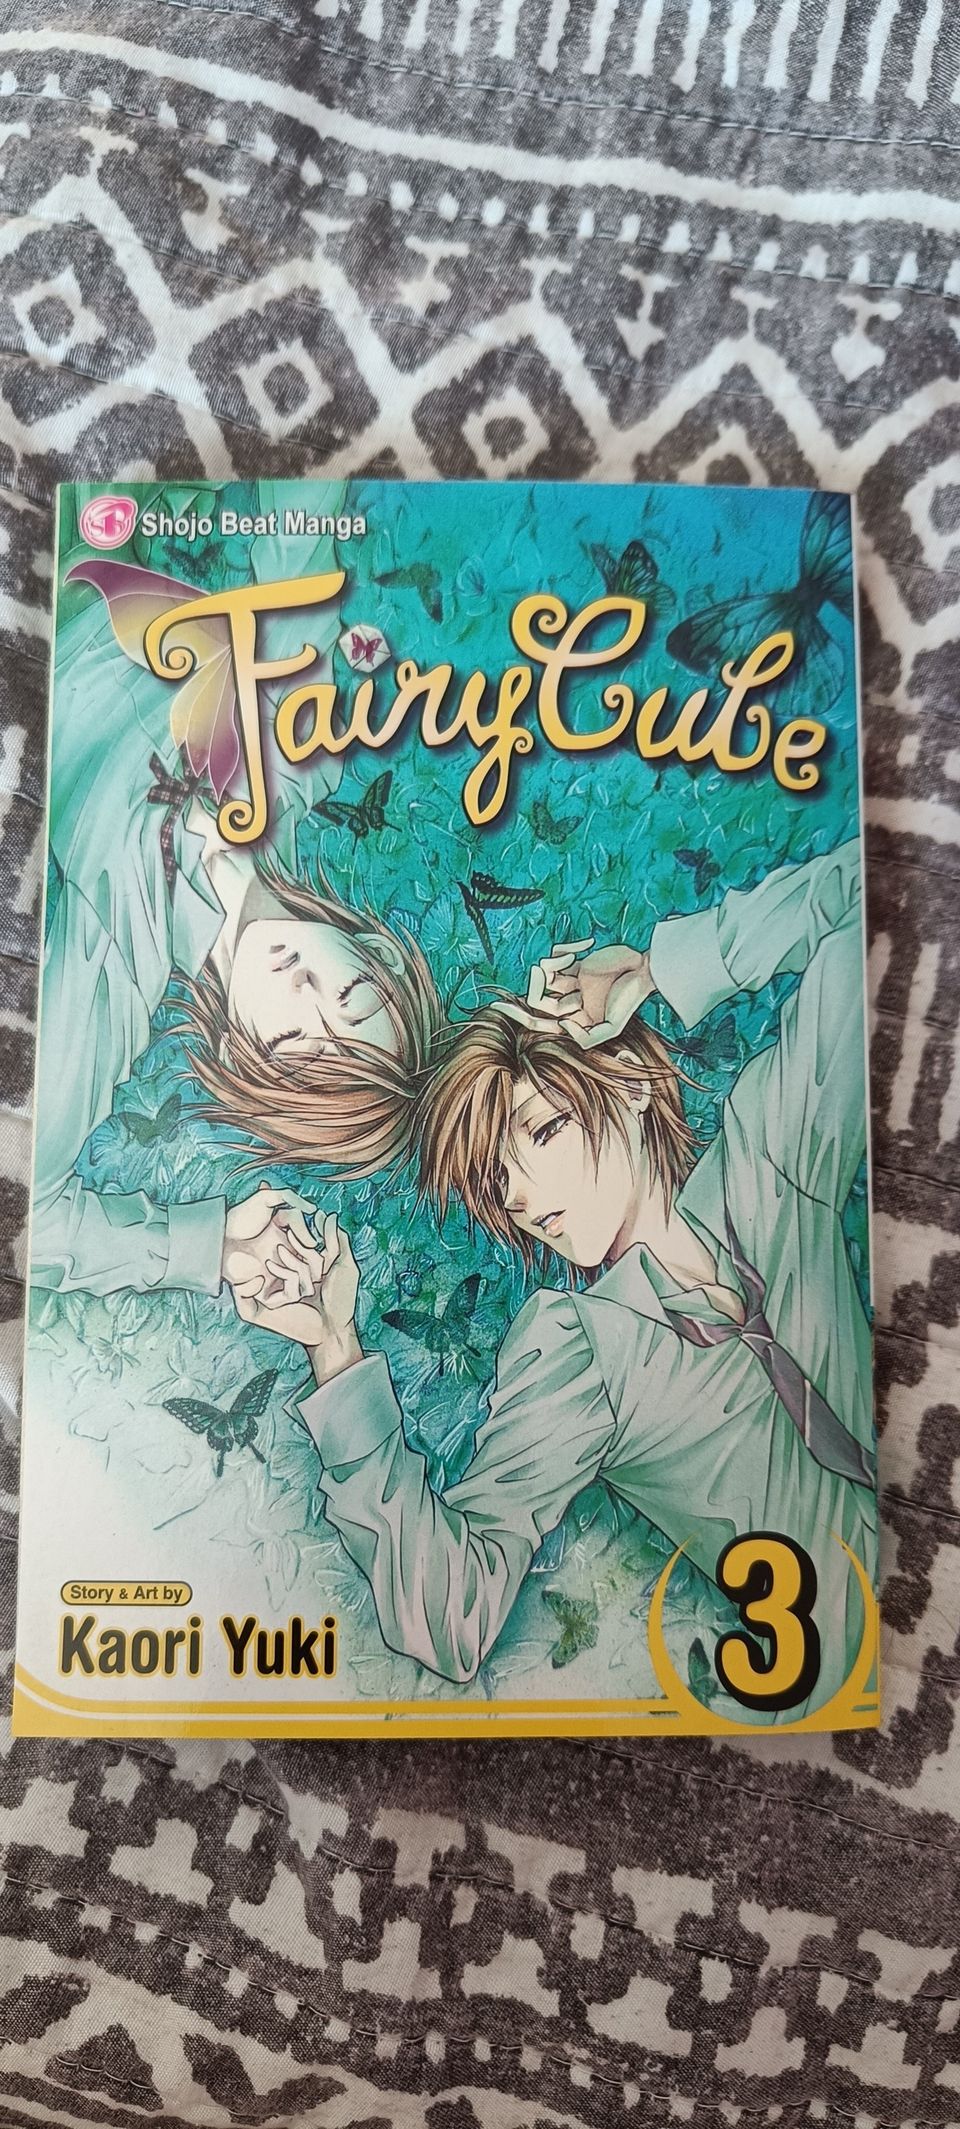 Fairy cube manga